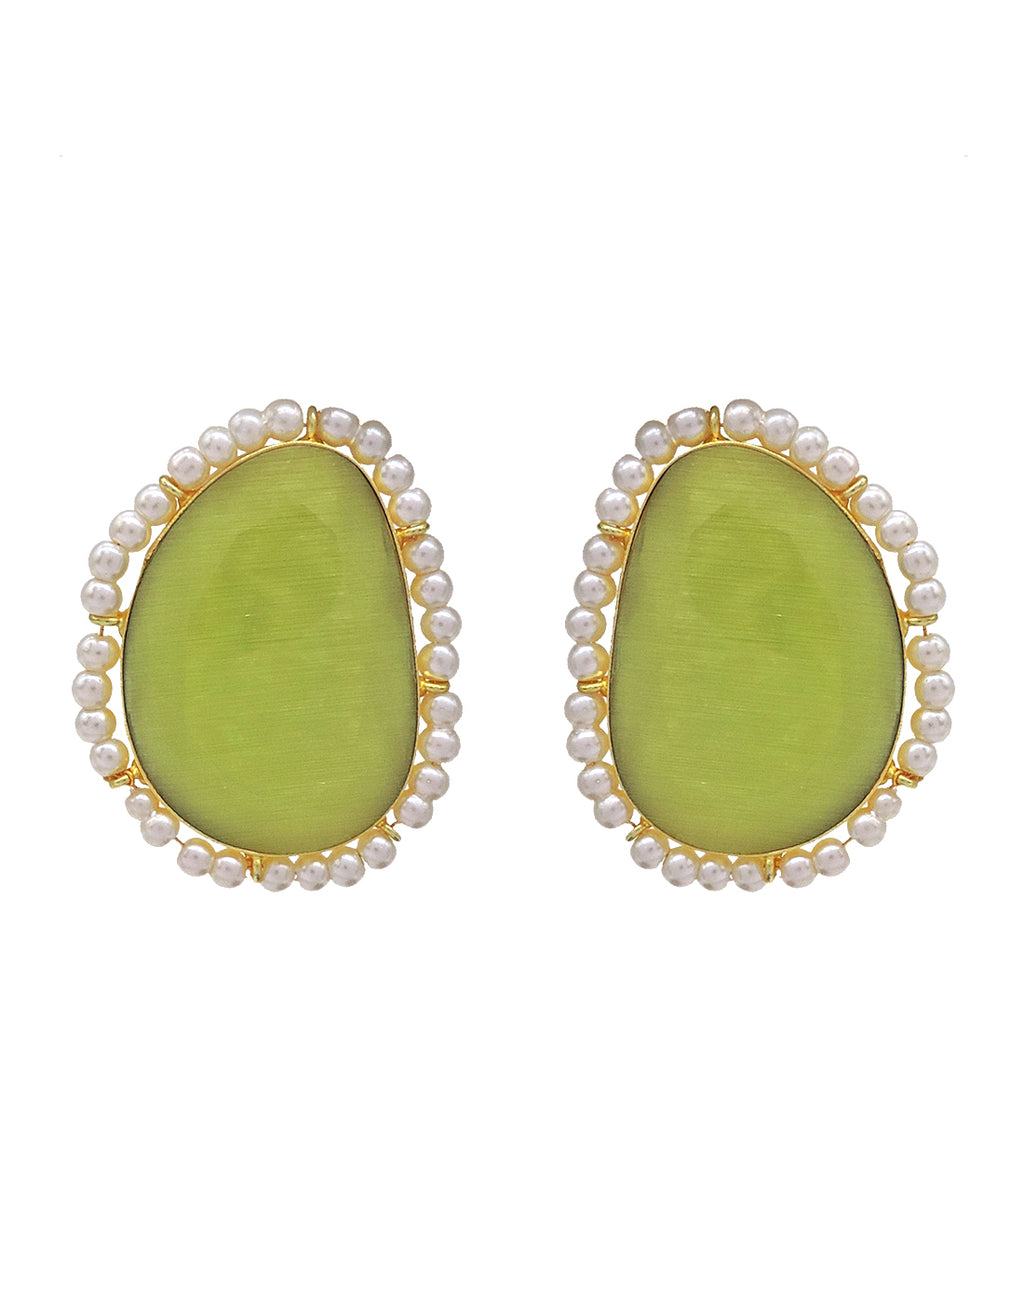 Irregular Oval Earrings | Apple Green & Blue - Statement Earrings - Gold-Plated & Hypoallergenic - Made in India - Dubai Jewellery - Dori